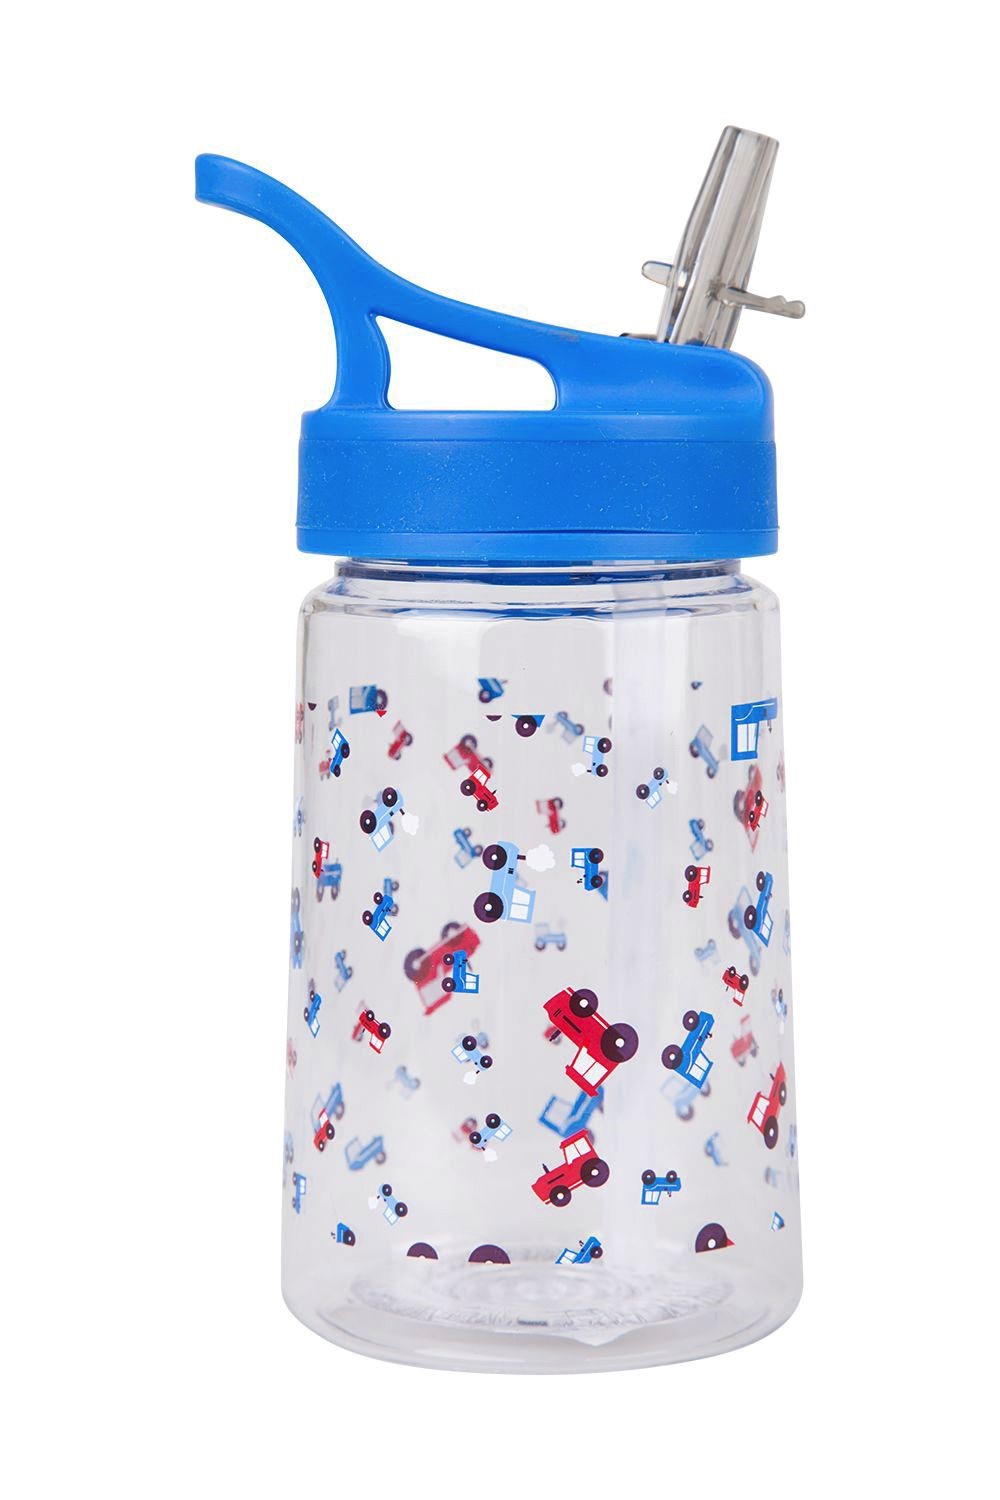 5.7 million kids water bottles recalled due to choking hazard - WENY News